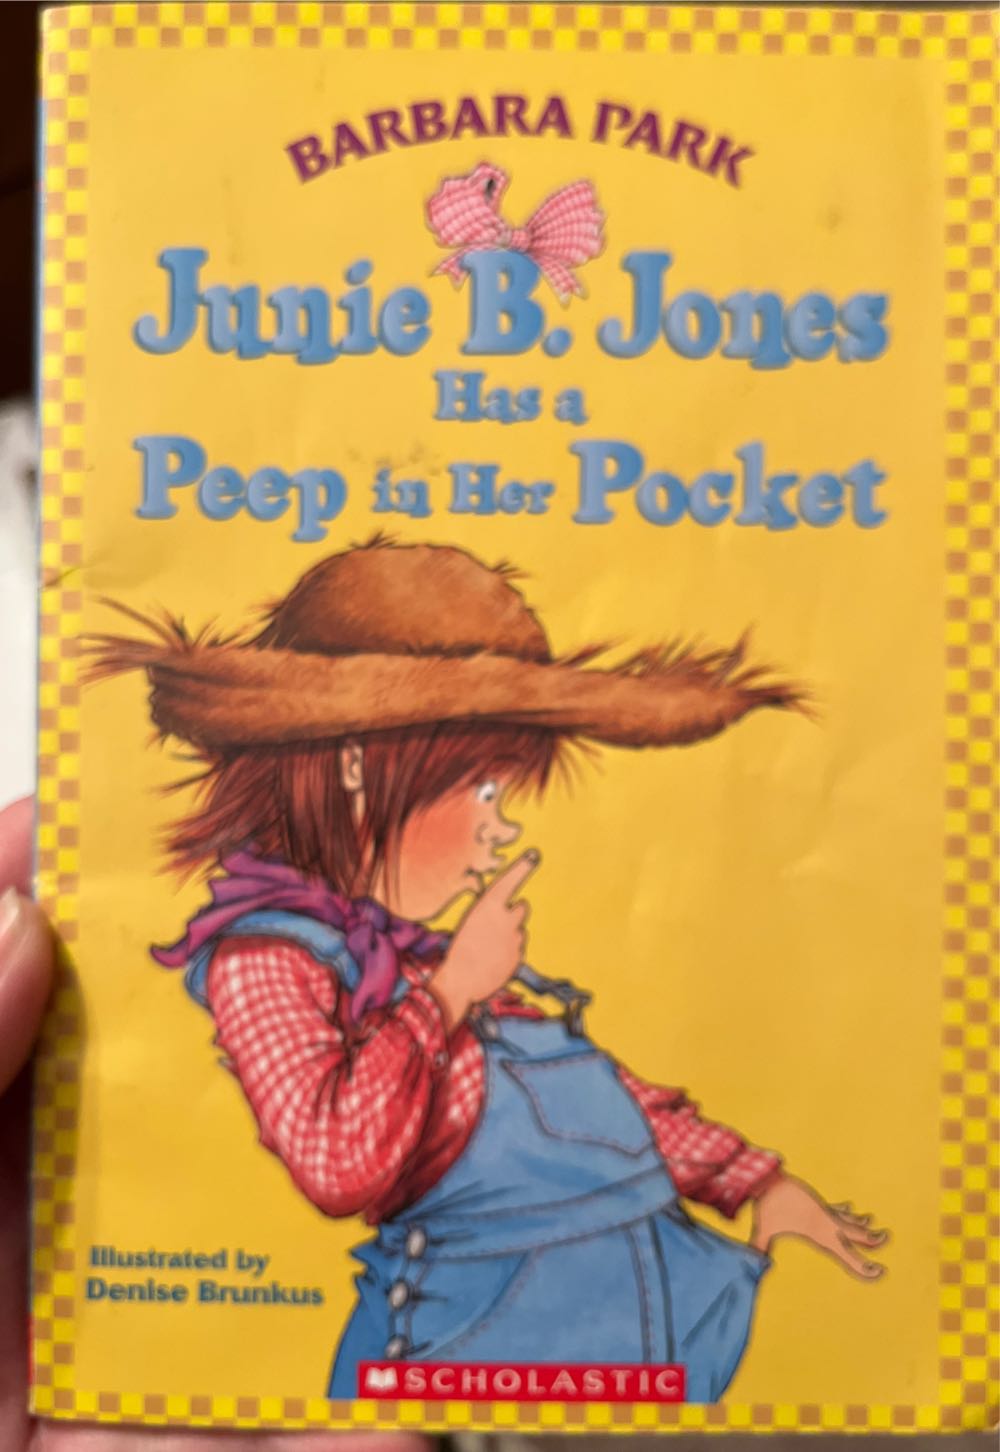 Junie B. Jones Has A Peep In Her Pocket - Barbara Park (Scholastic Inc. - Paperback) book collectible [Barcode 9780439223096] - Main Image 3